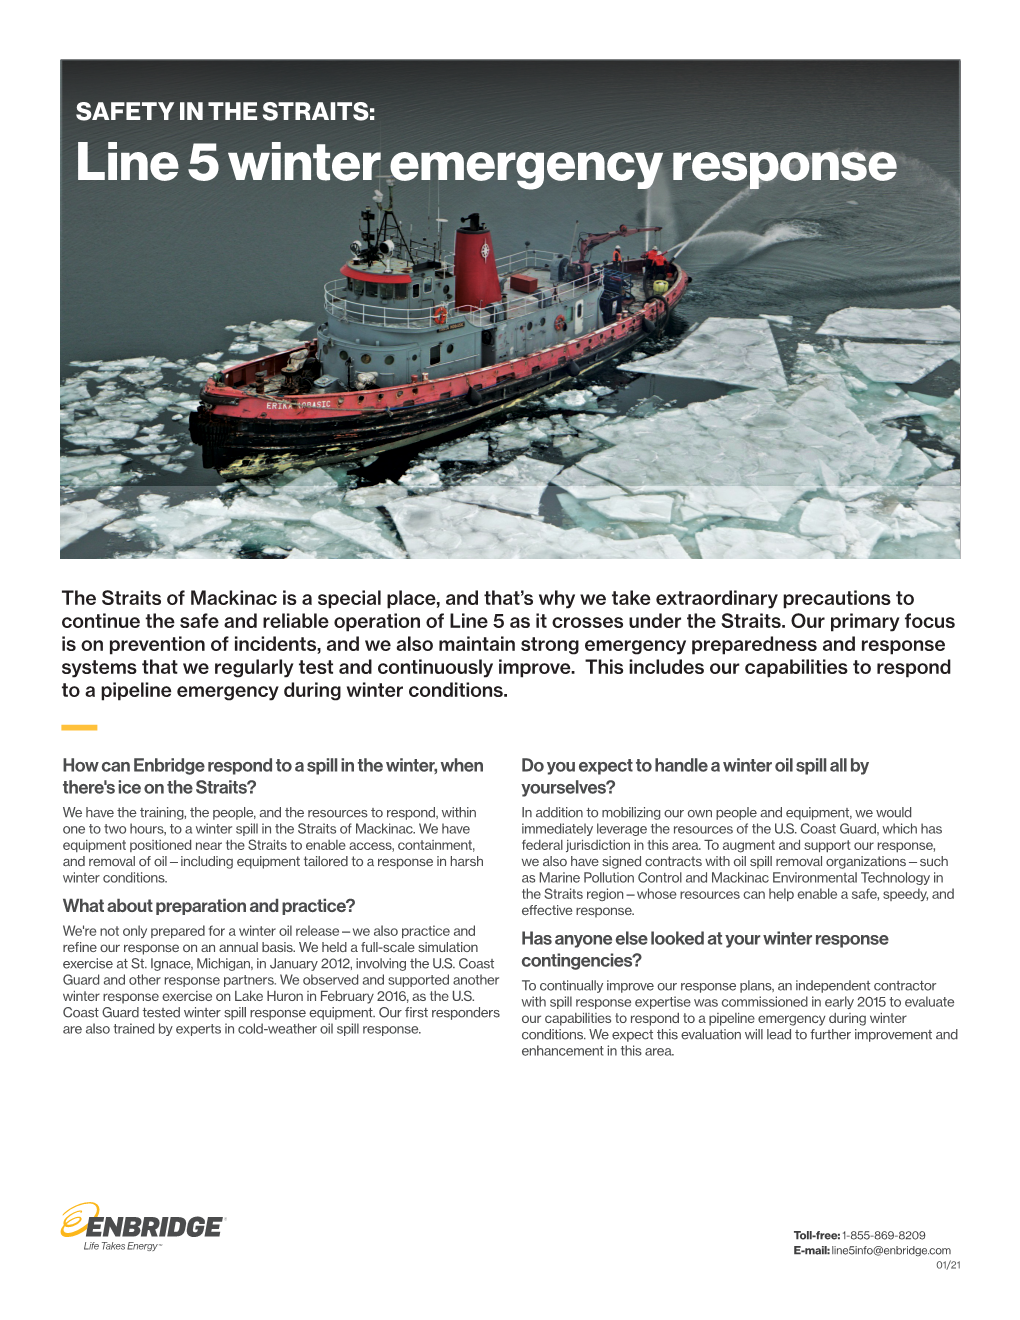 Line 5 Winter Emergency Response